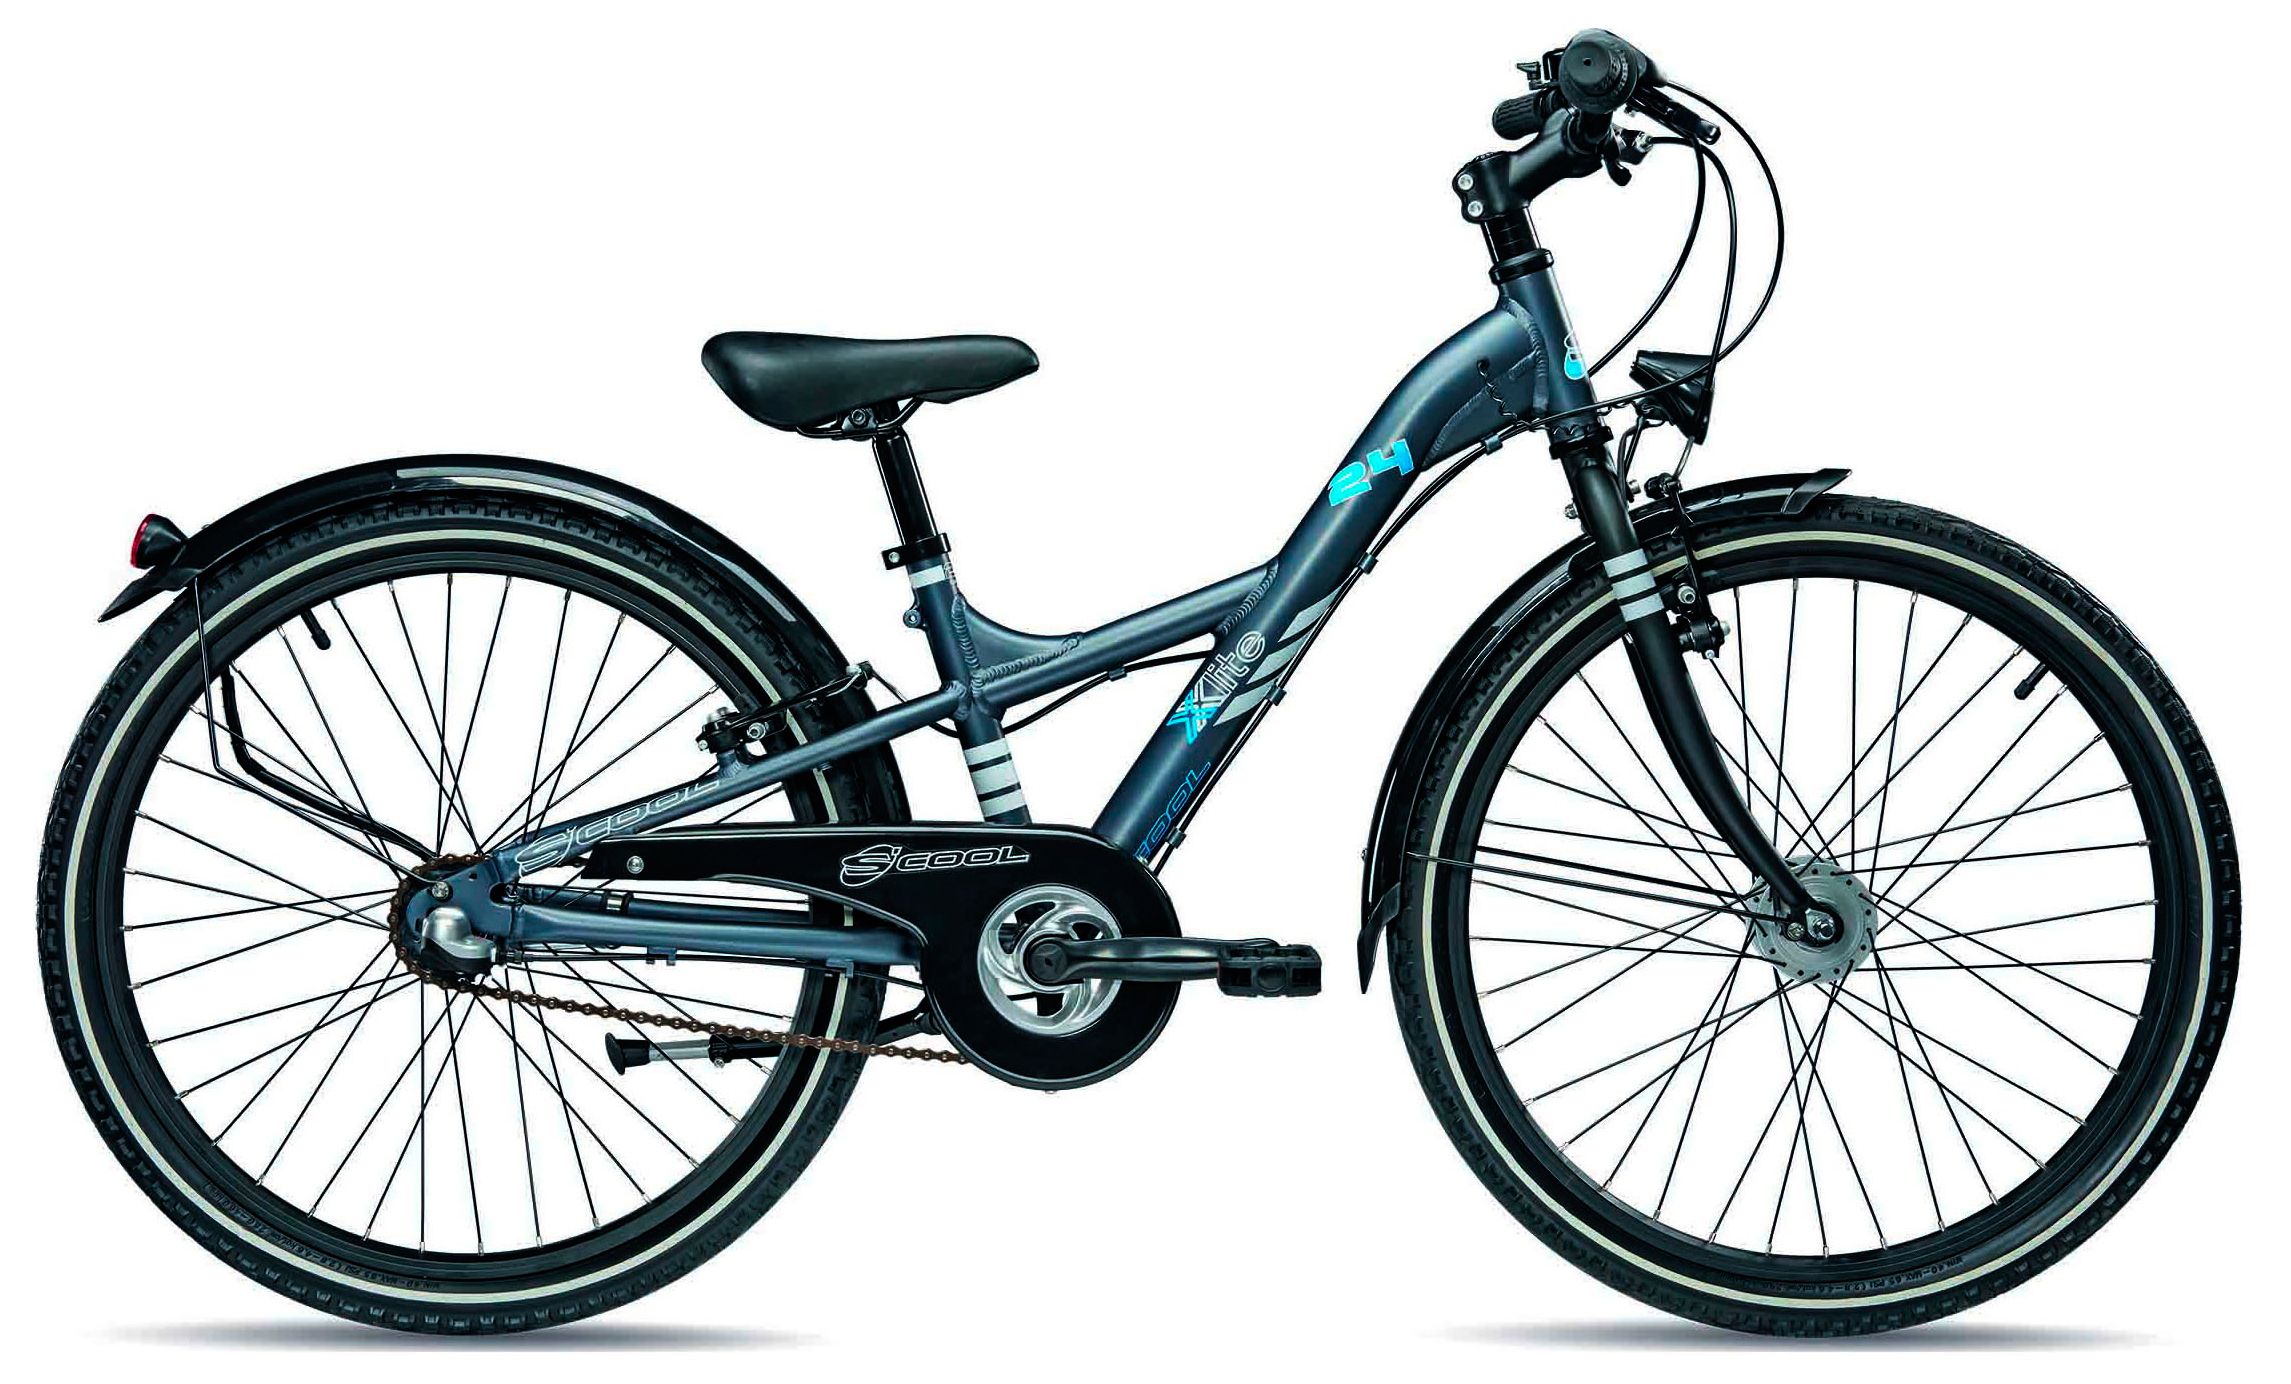  Отзывы о Детском велосипеде Scool XXlite comp 24-3 2015